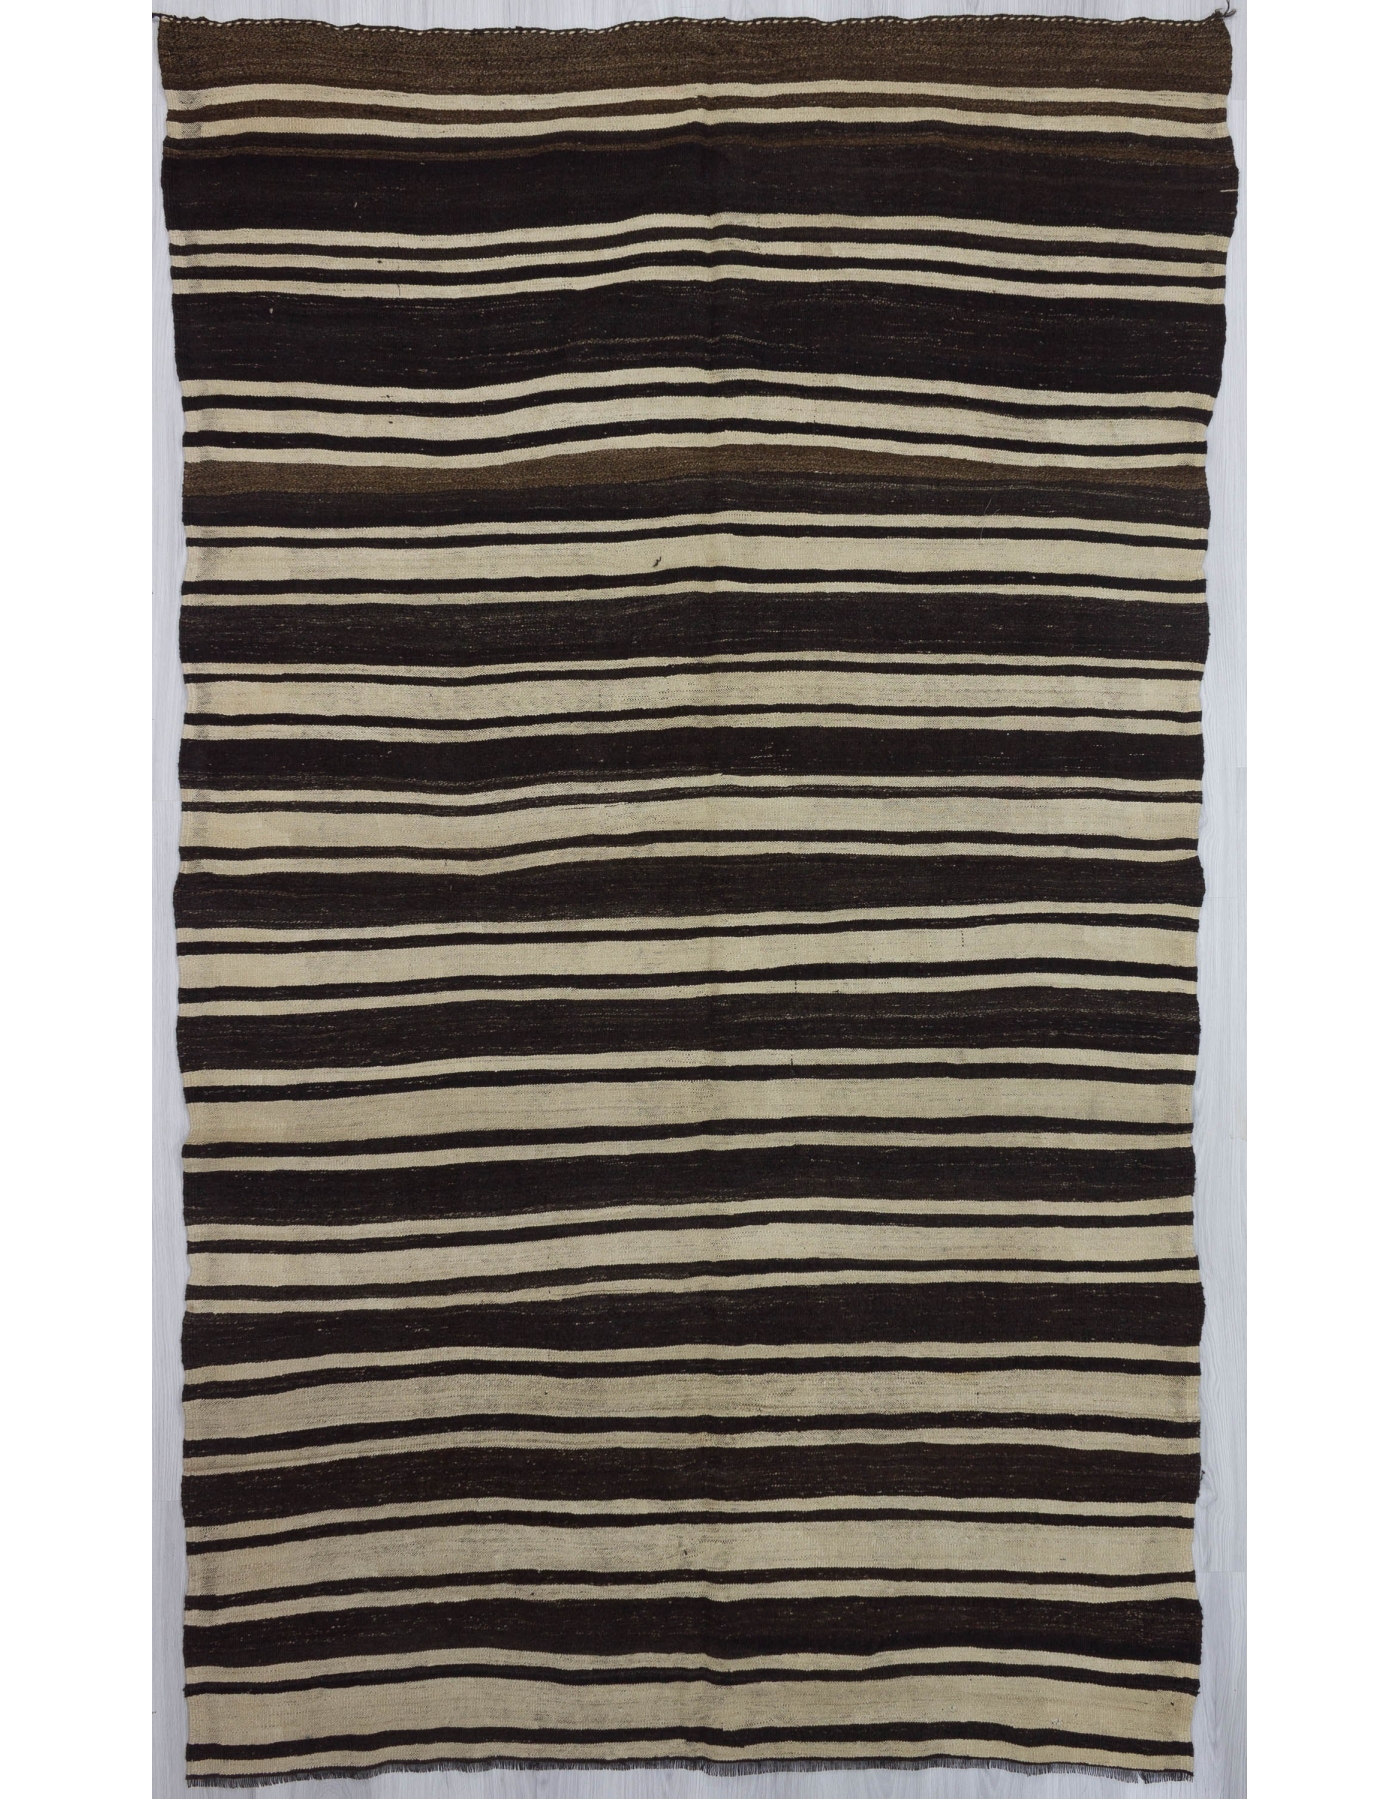 Brown Black White Striped Kilim Rug, Striped Kilim Rug